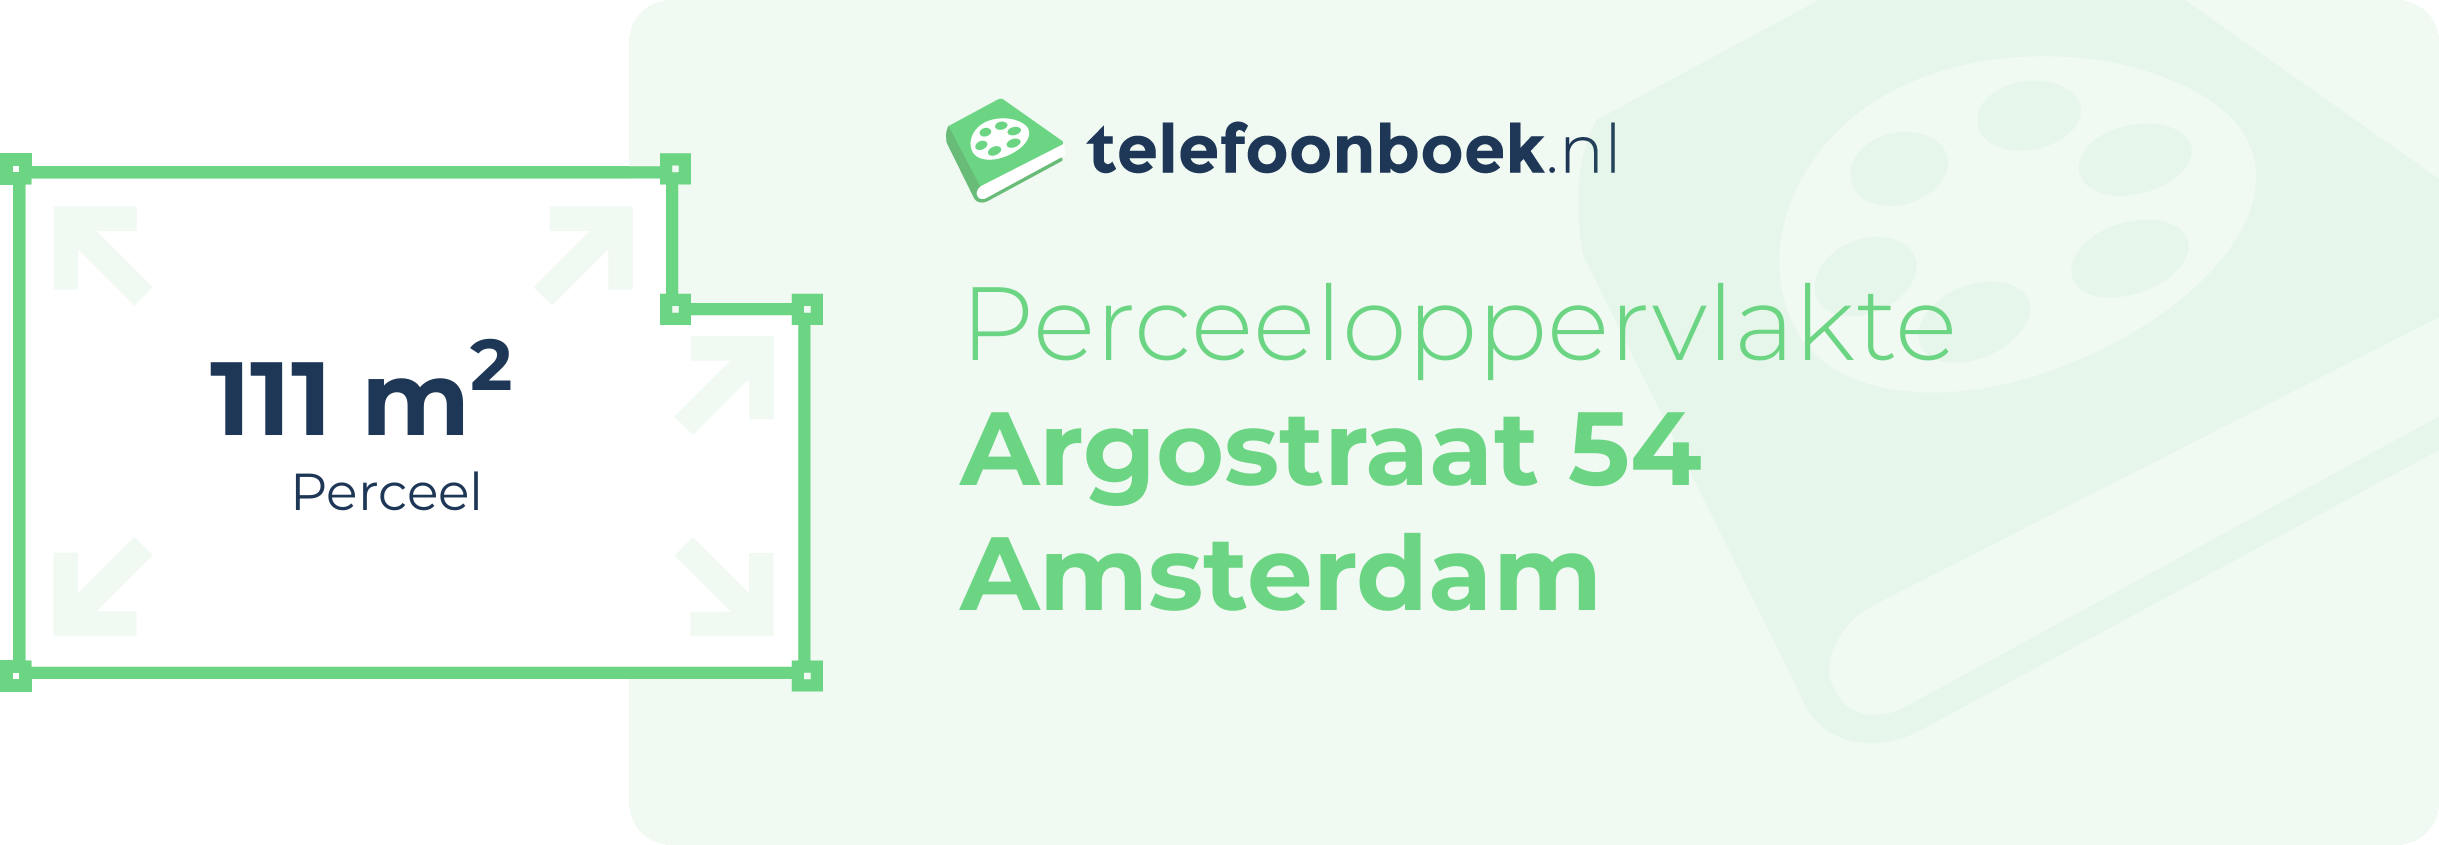 Perceeloppervlakte Argostraat 54 Amsterdam